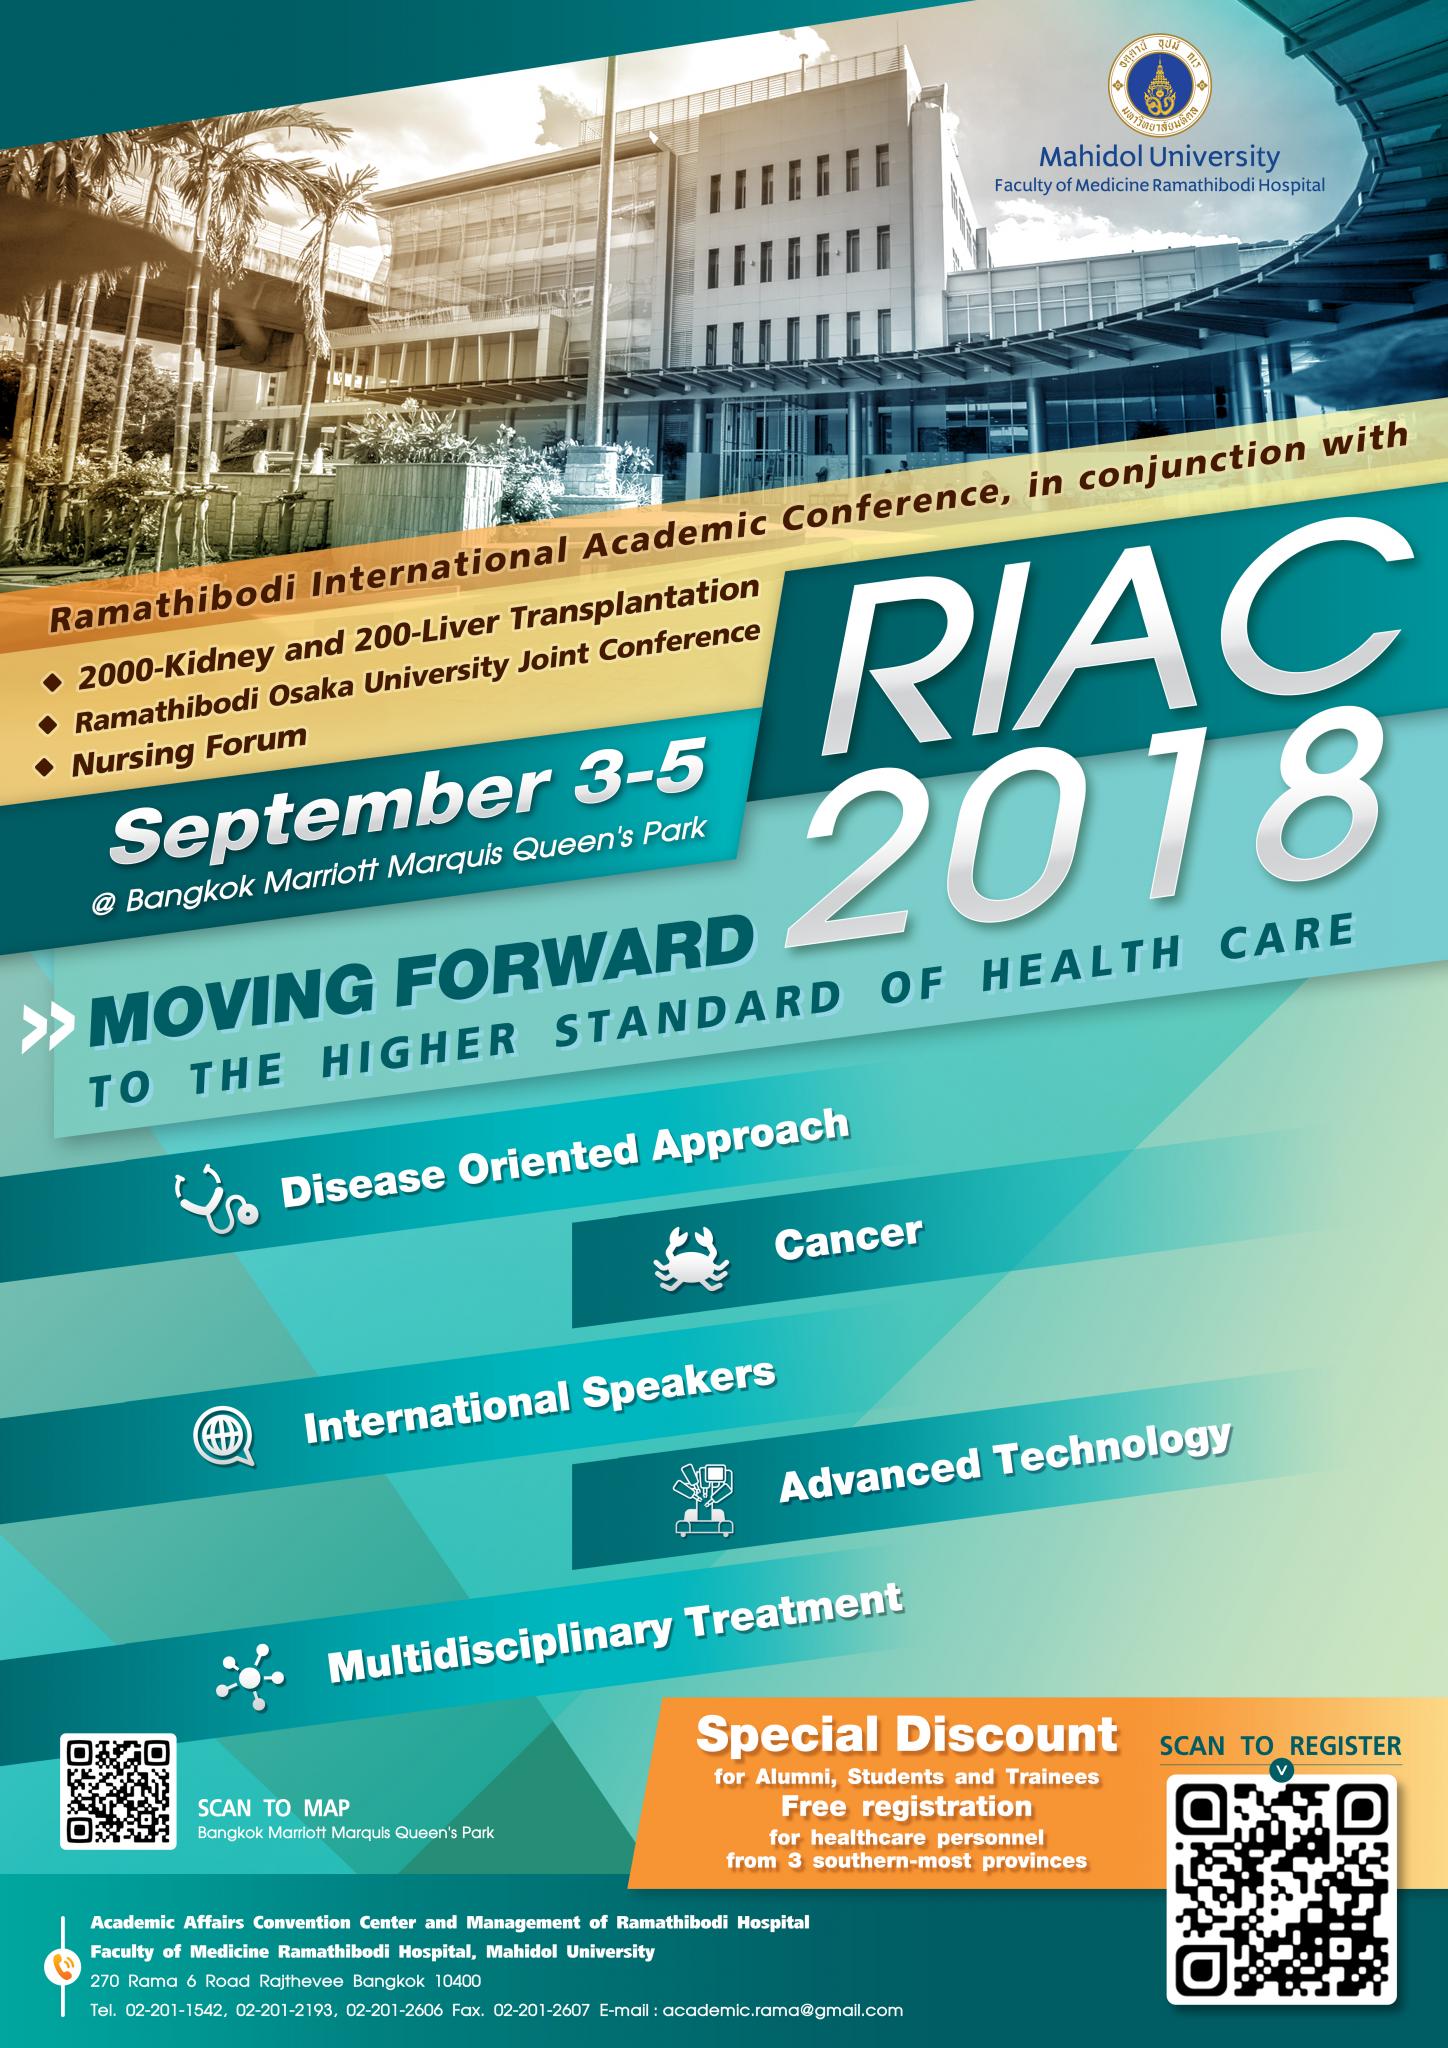 Ramathibodi international Academic Conference (RIAC) 2018 "Moving forward to the higher standard of care"